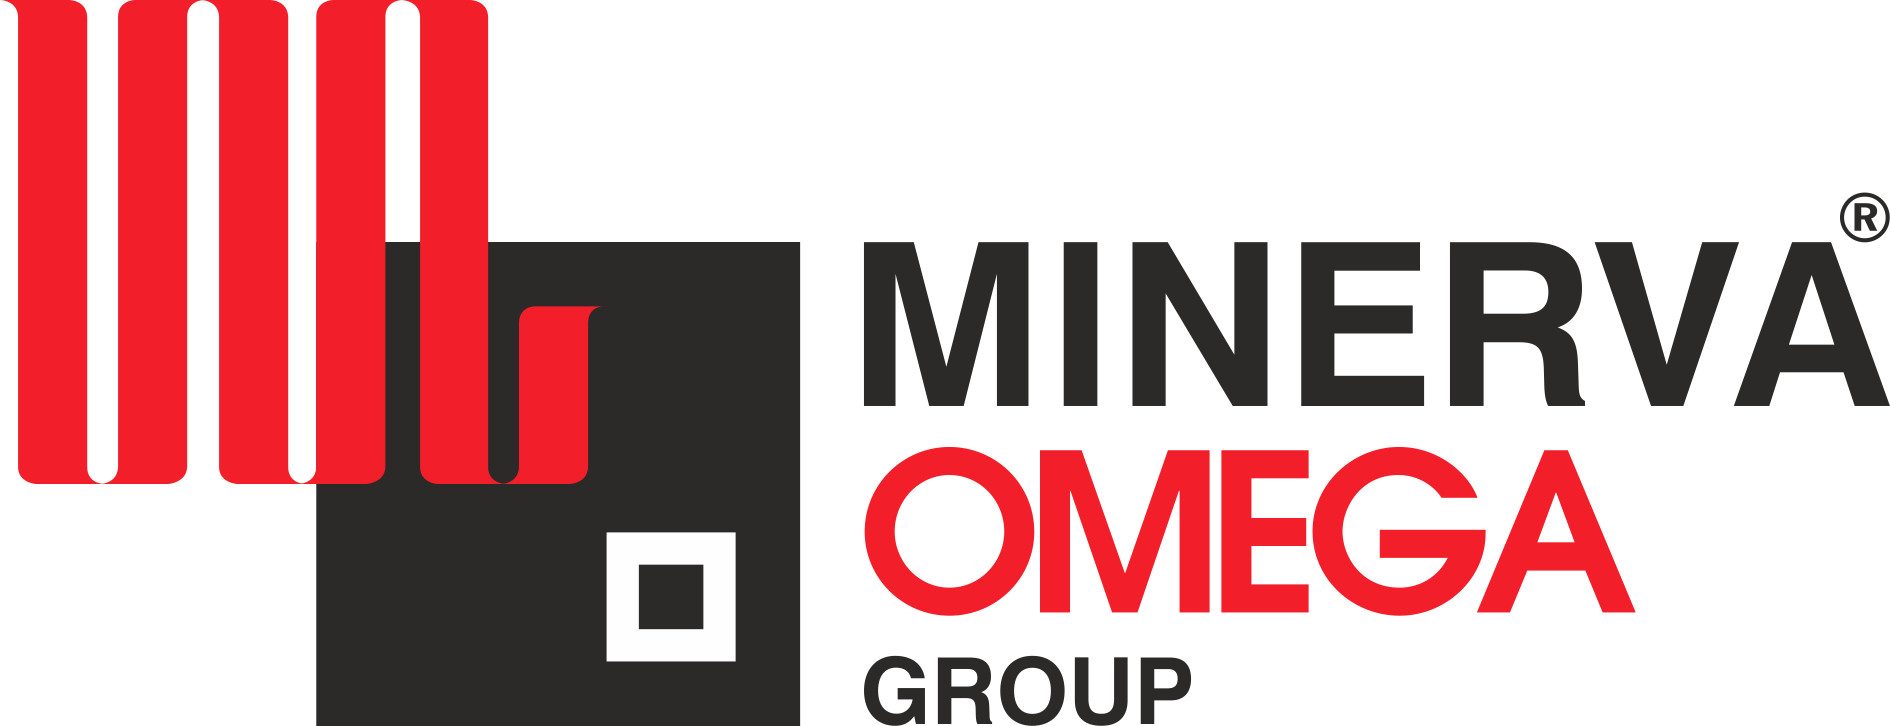 Logo Minerva Omega group